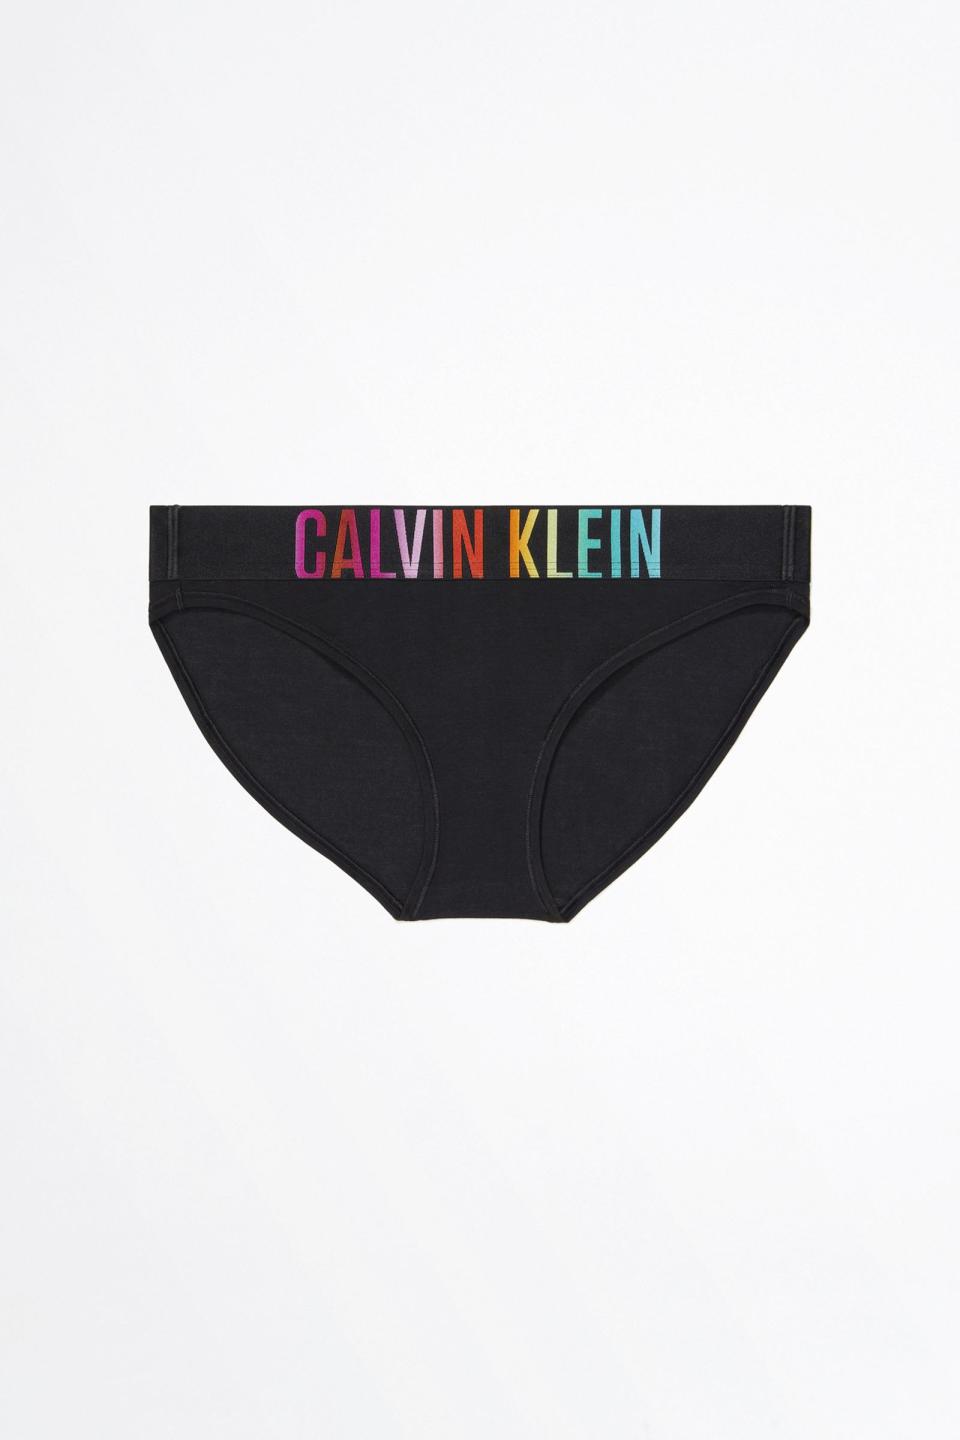 Calvin Klein Pride黑色比基尼內褲 NT$1,280。（Calvin Klein提供）